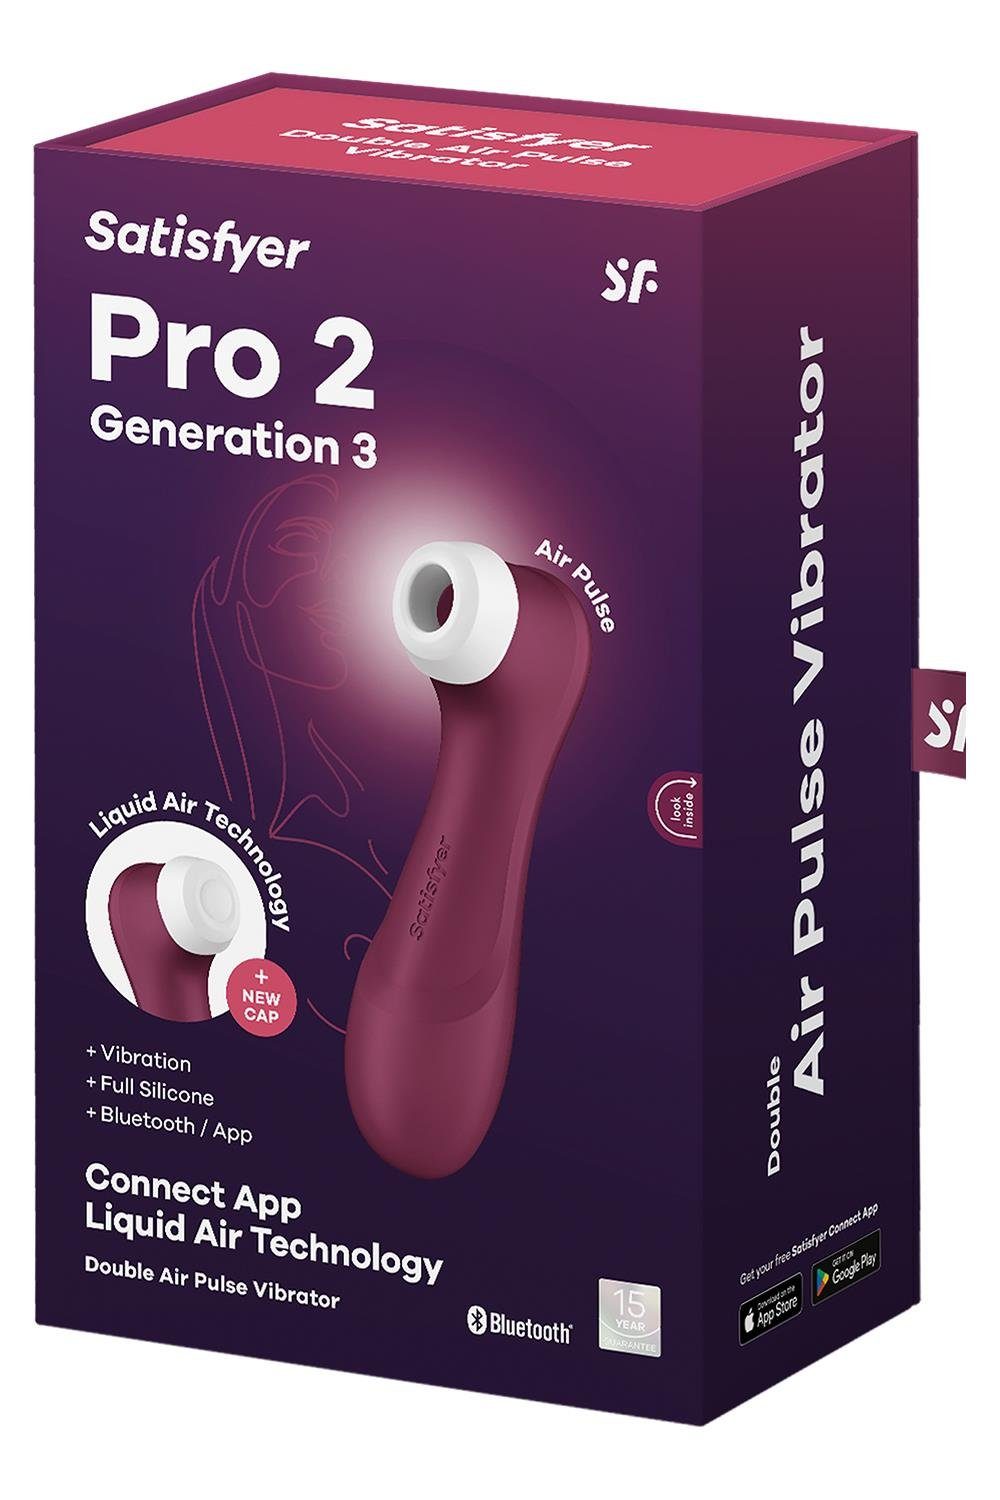 der bordeaux mit Wine Red, 3 2 Satisfyer Pro Satisfyer App Generation Vibrator Kompatibel Satisfyer Bluetooth